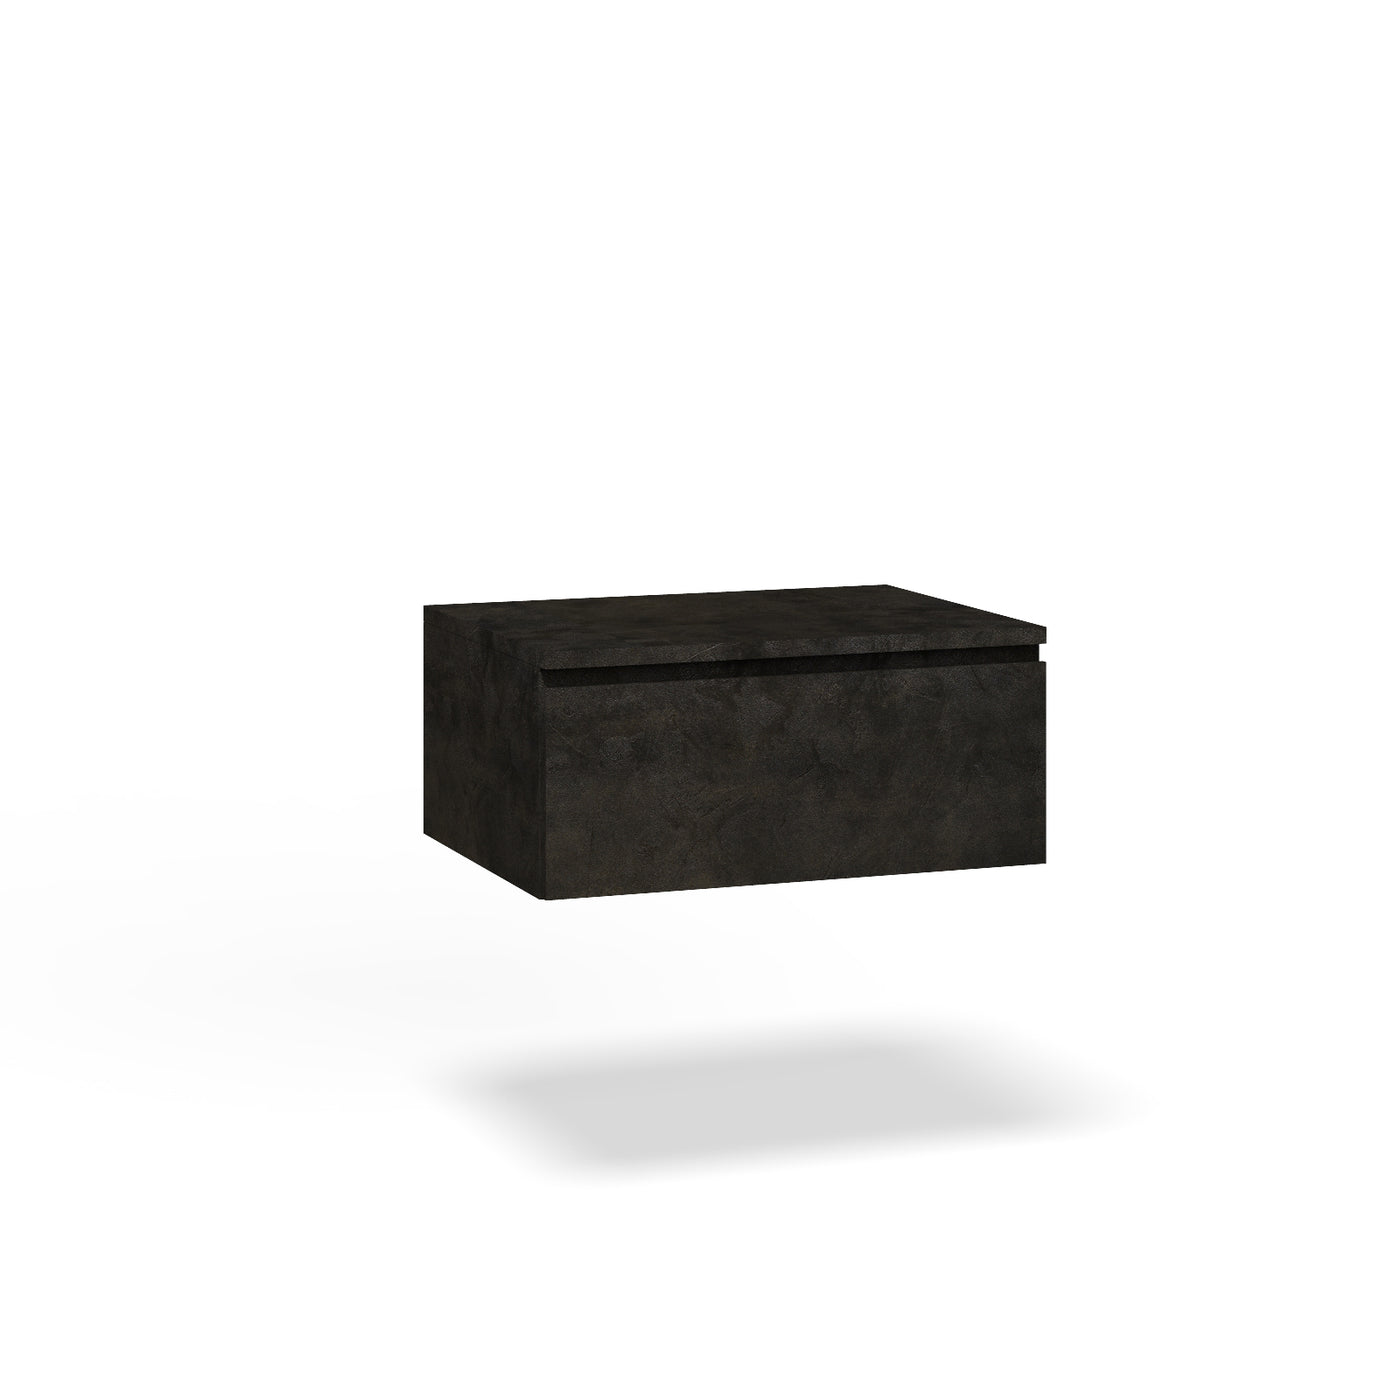 Base with 1 drawer YOKA stone gray top 60 cm